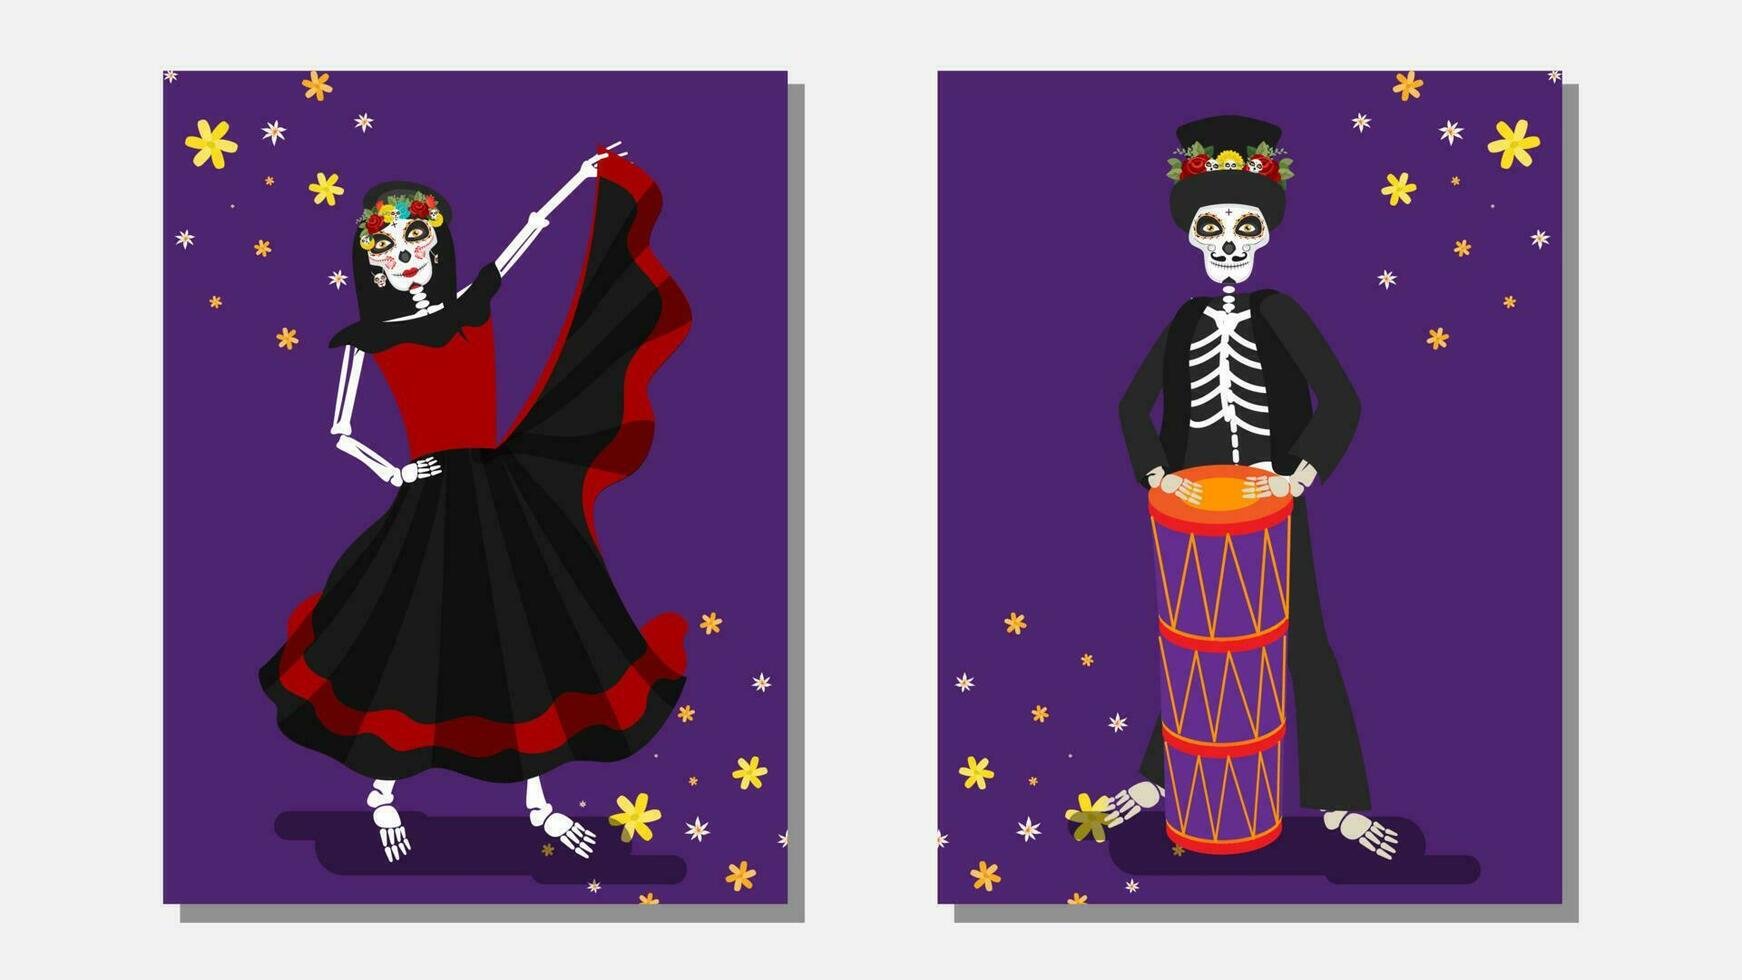 ilustración de catrina bailando y esqueleto hombre participación tambor en púrpura antecedentes en dos opción. vector